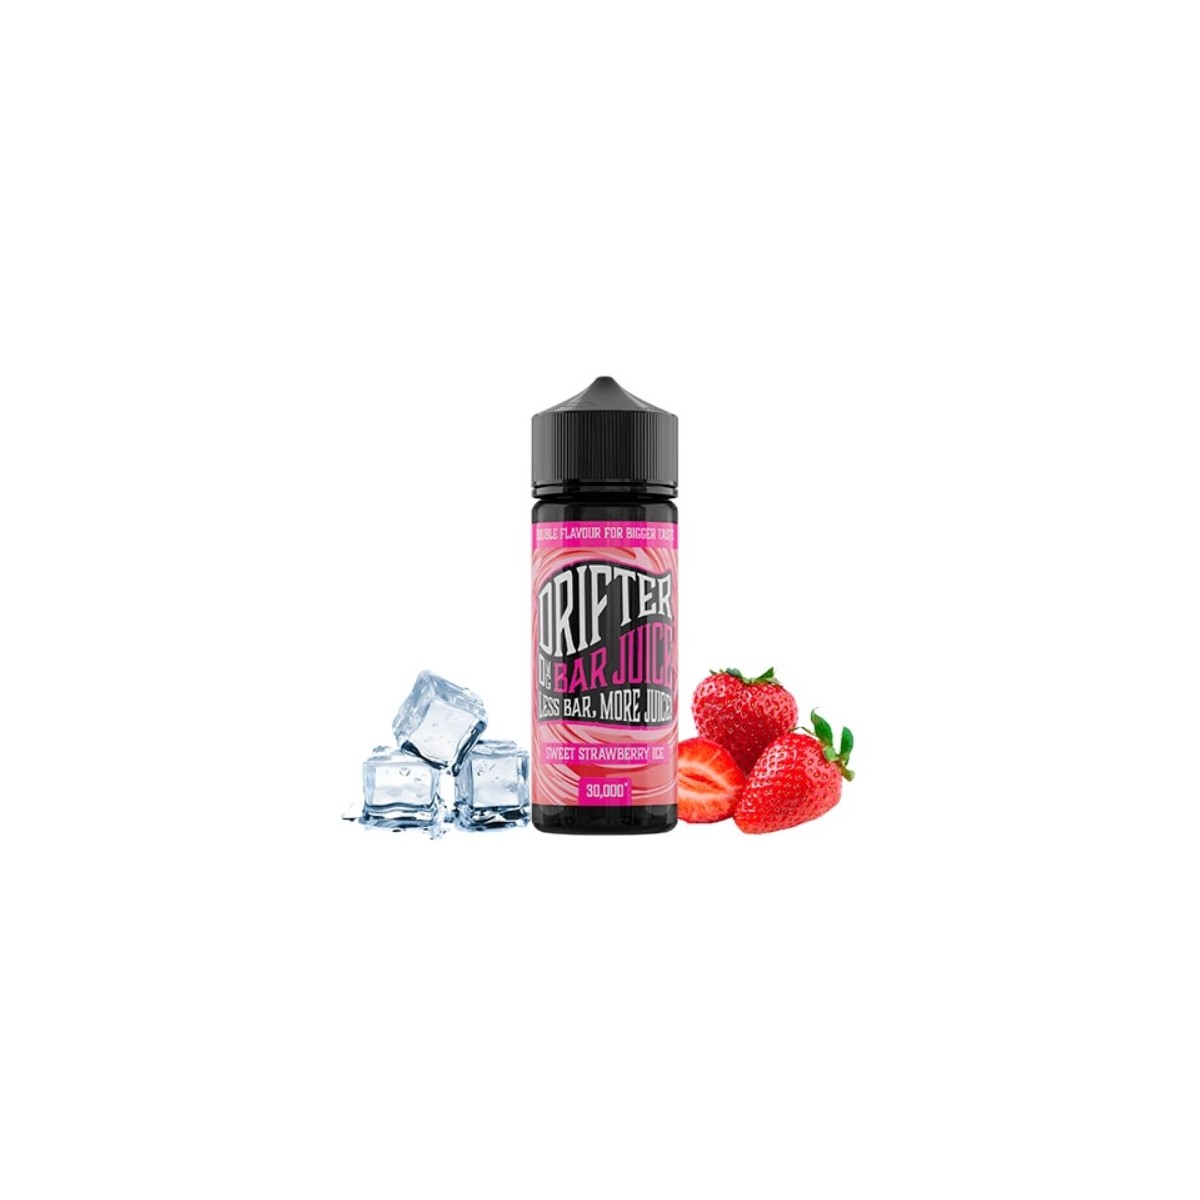 Sweet Strawberry Ice 100ml - Drifter